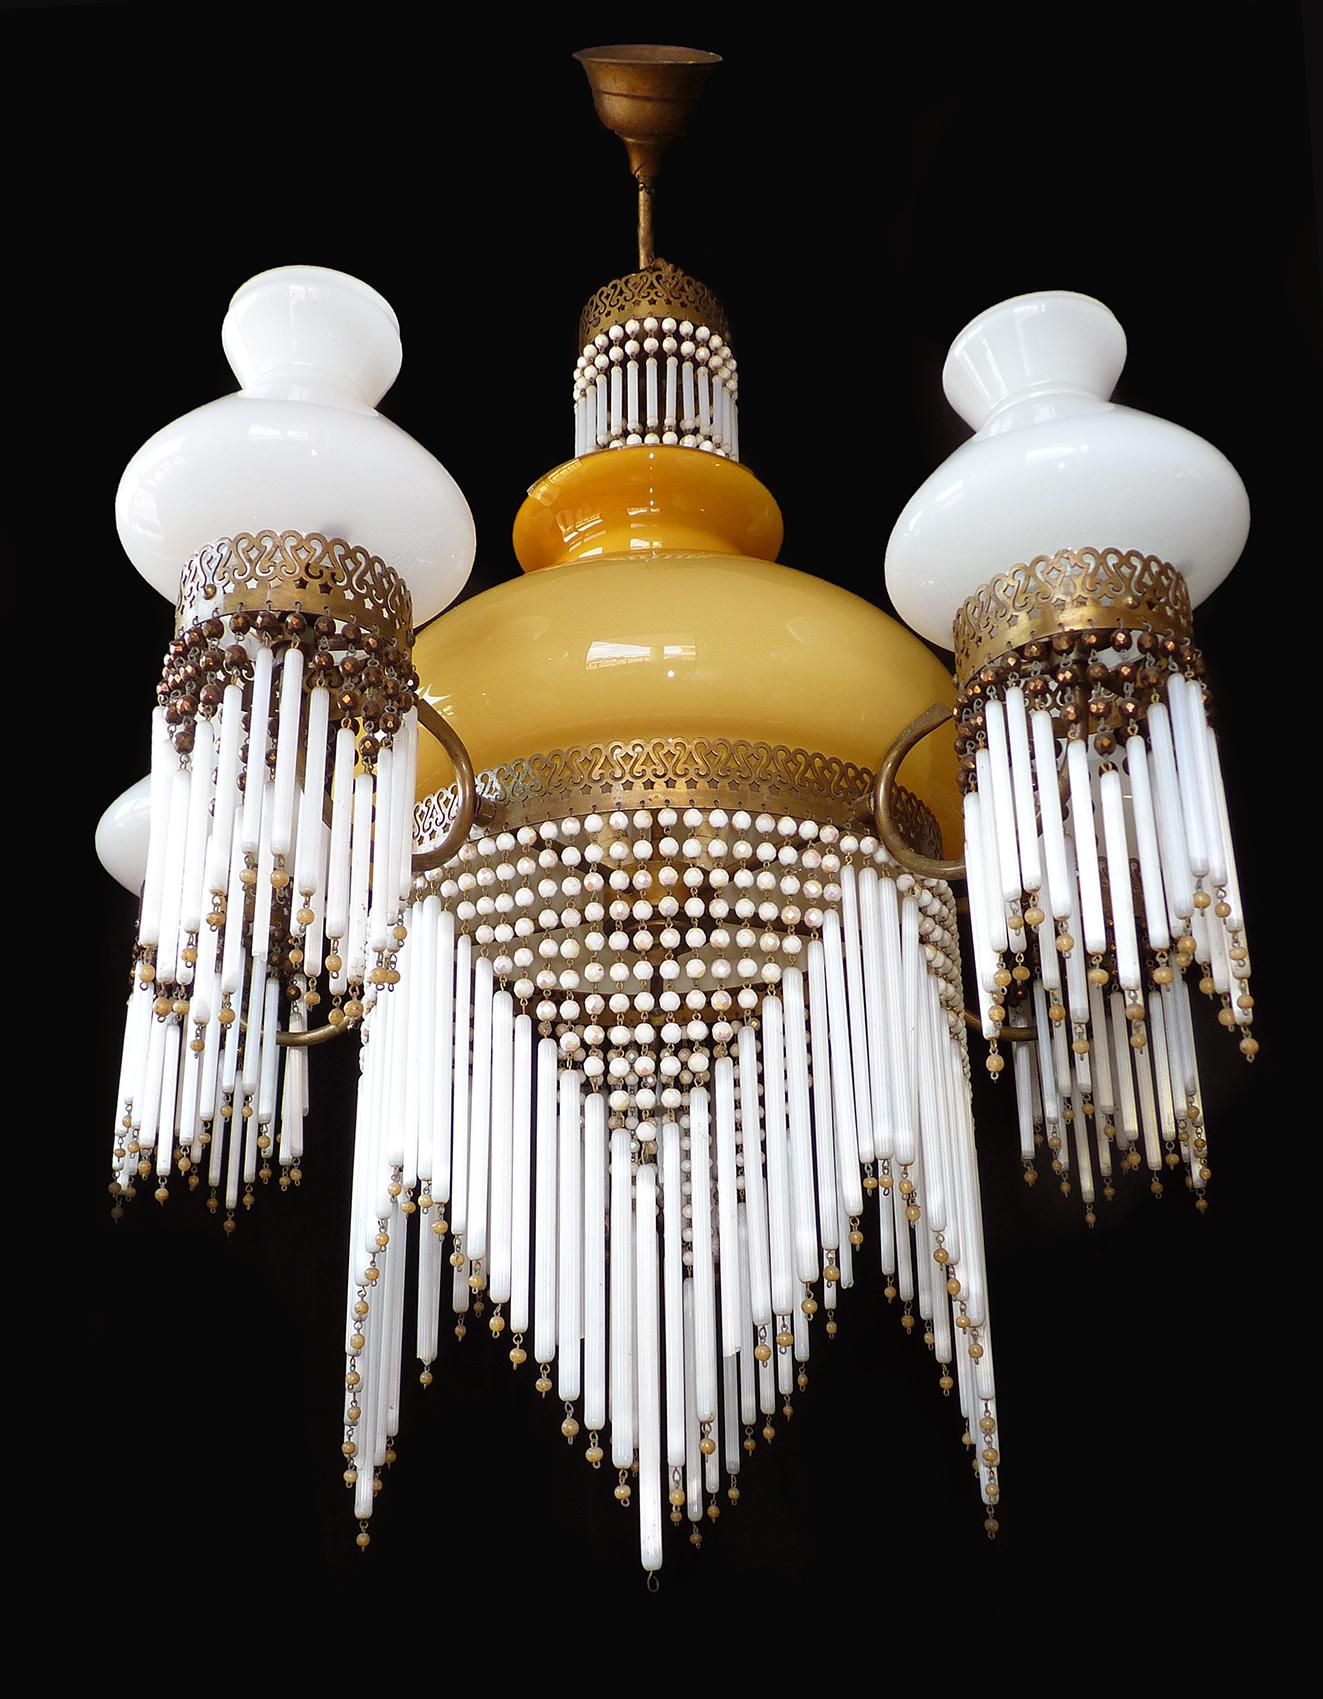 glass lamp shade with beaded fringe